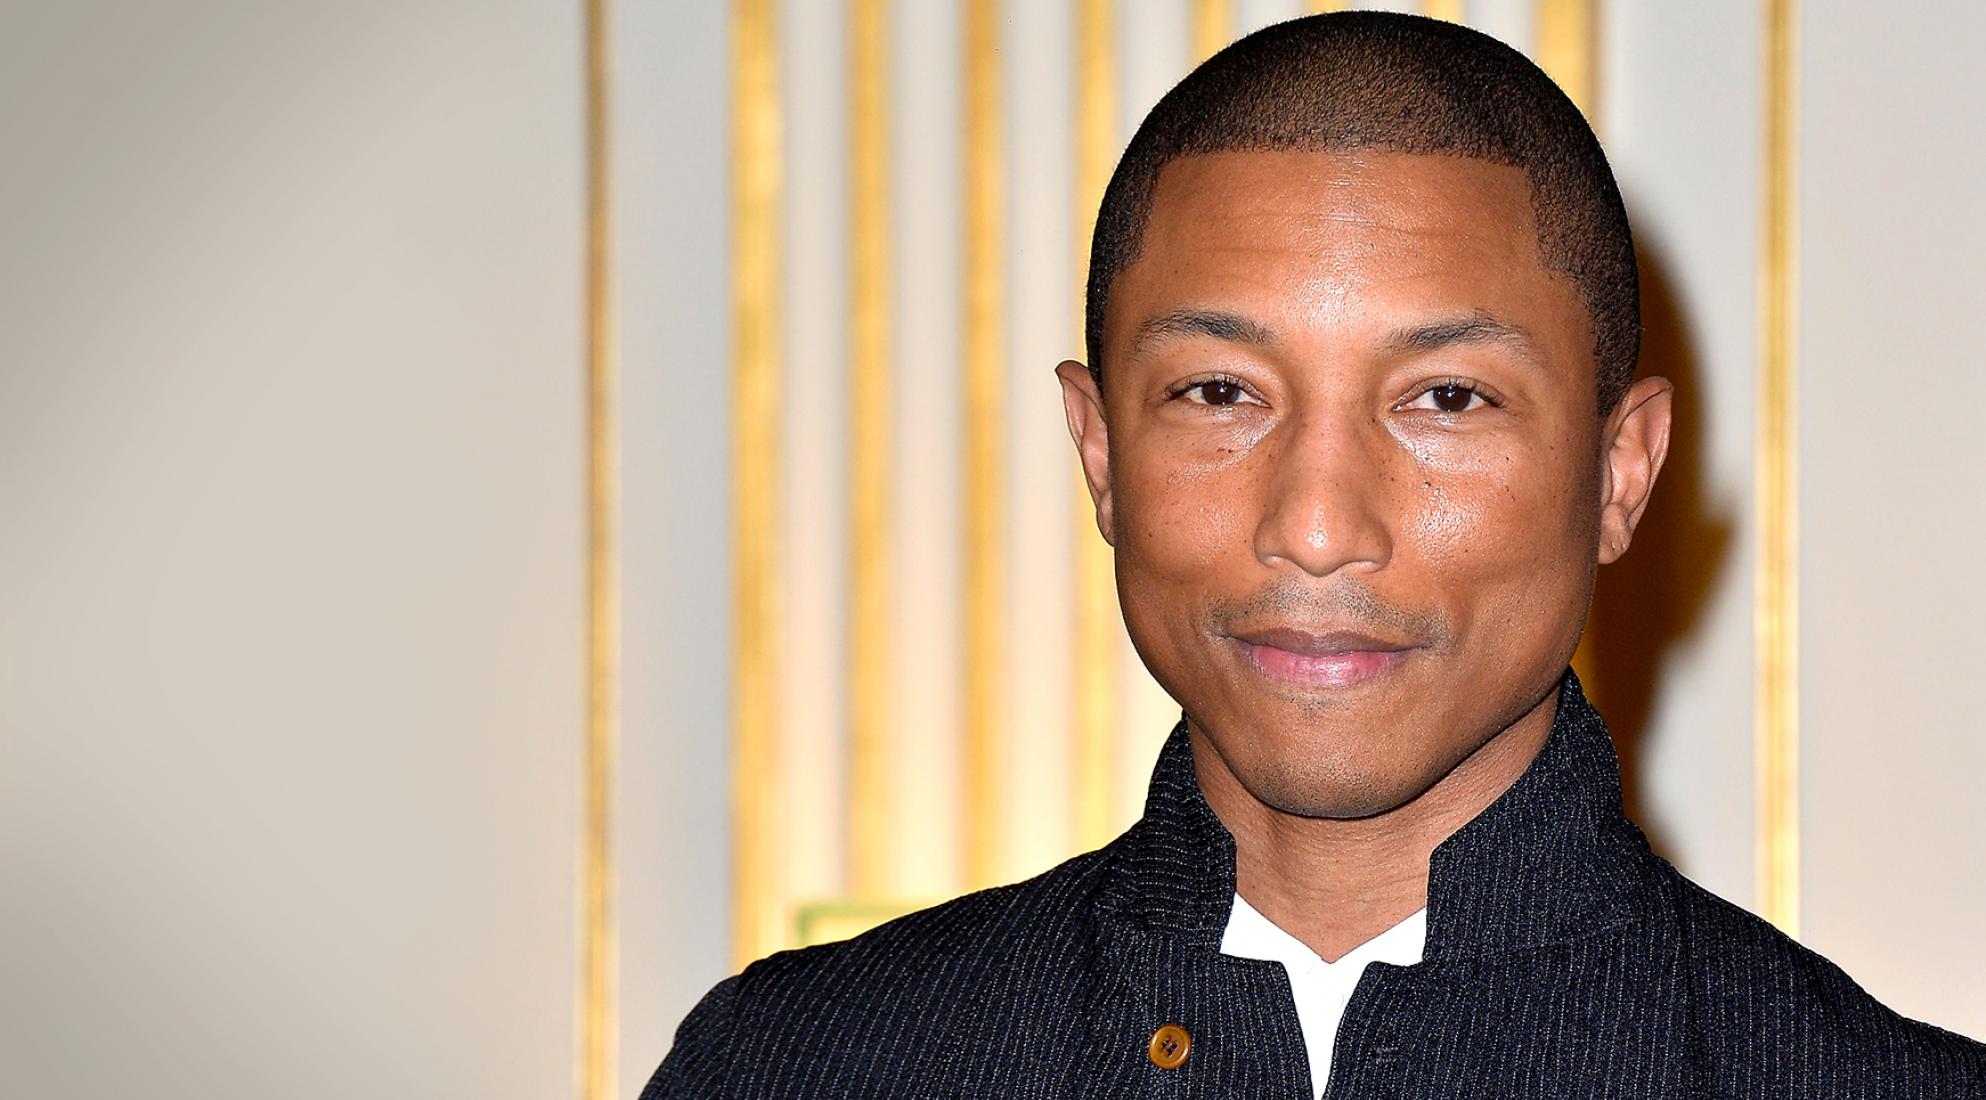 Escuela del sur de Florida recibió la visita sorpresa del cantante Pharrell